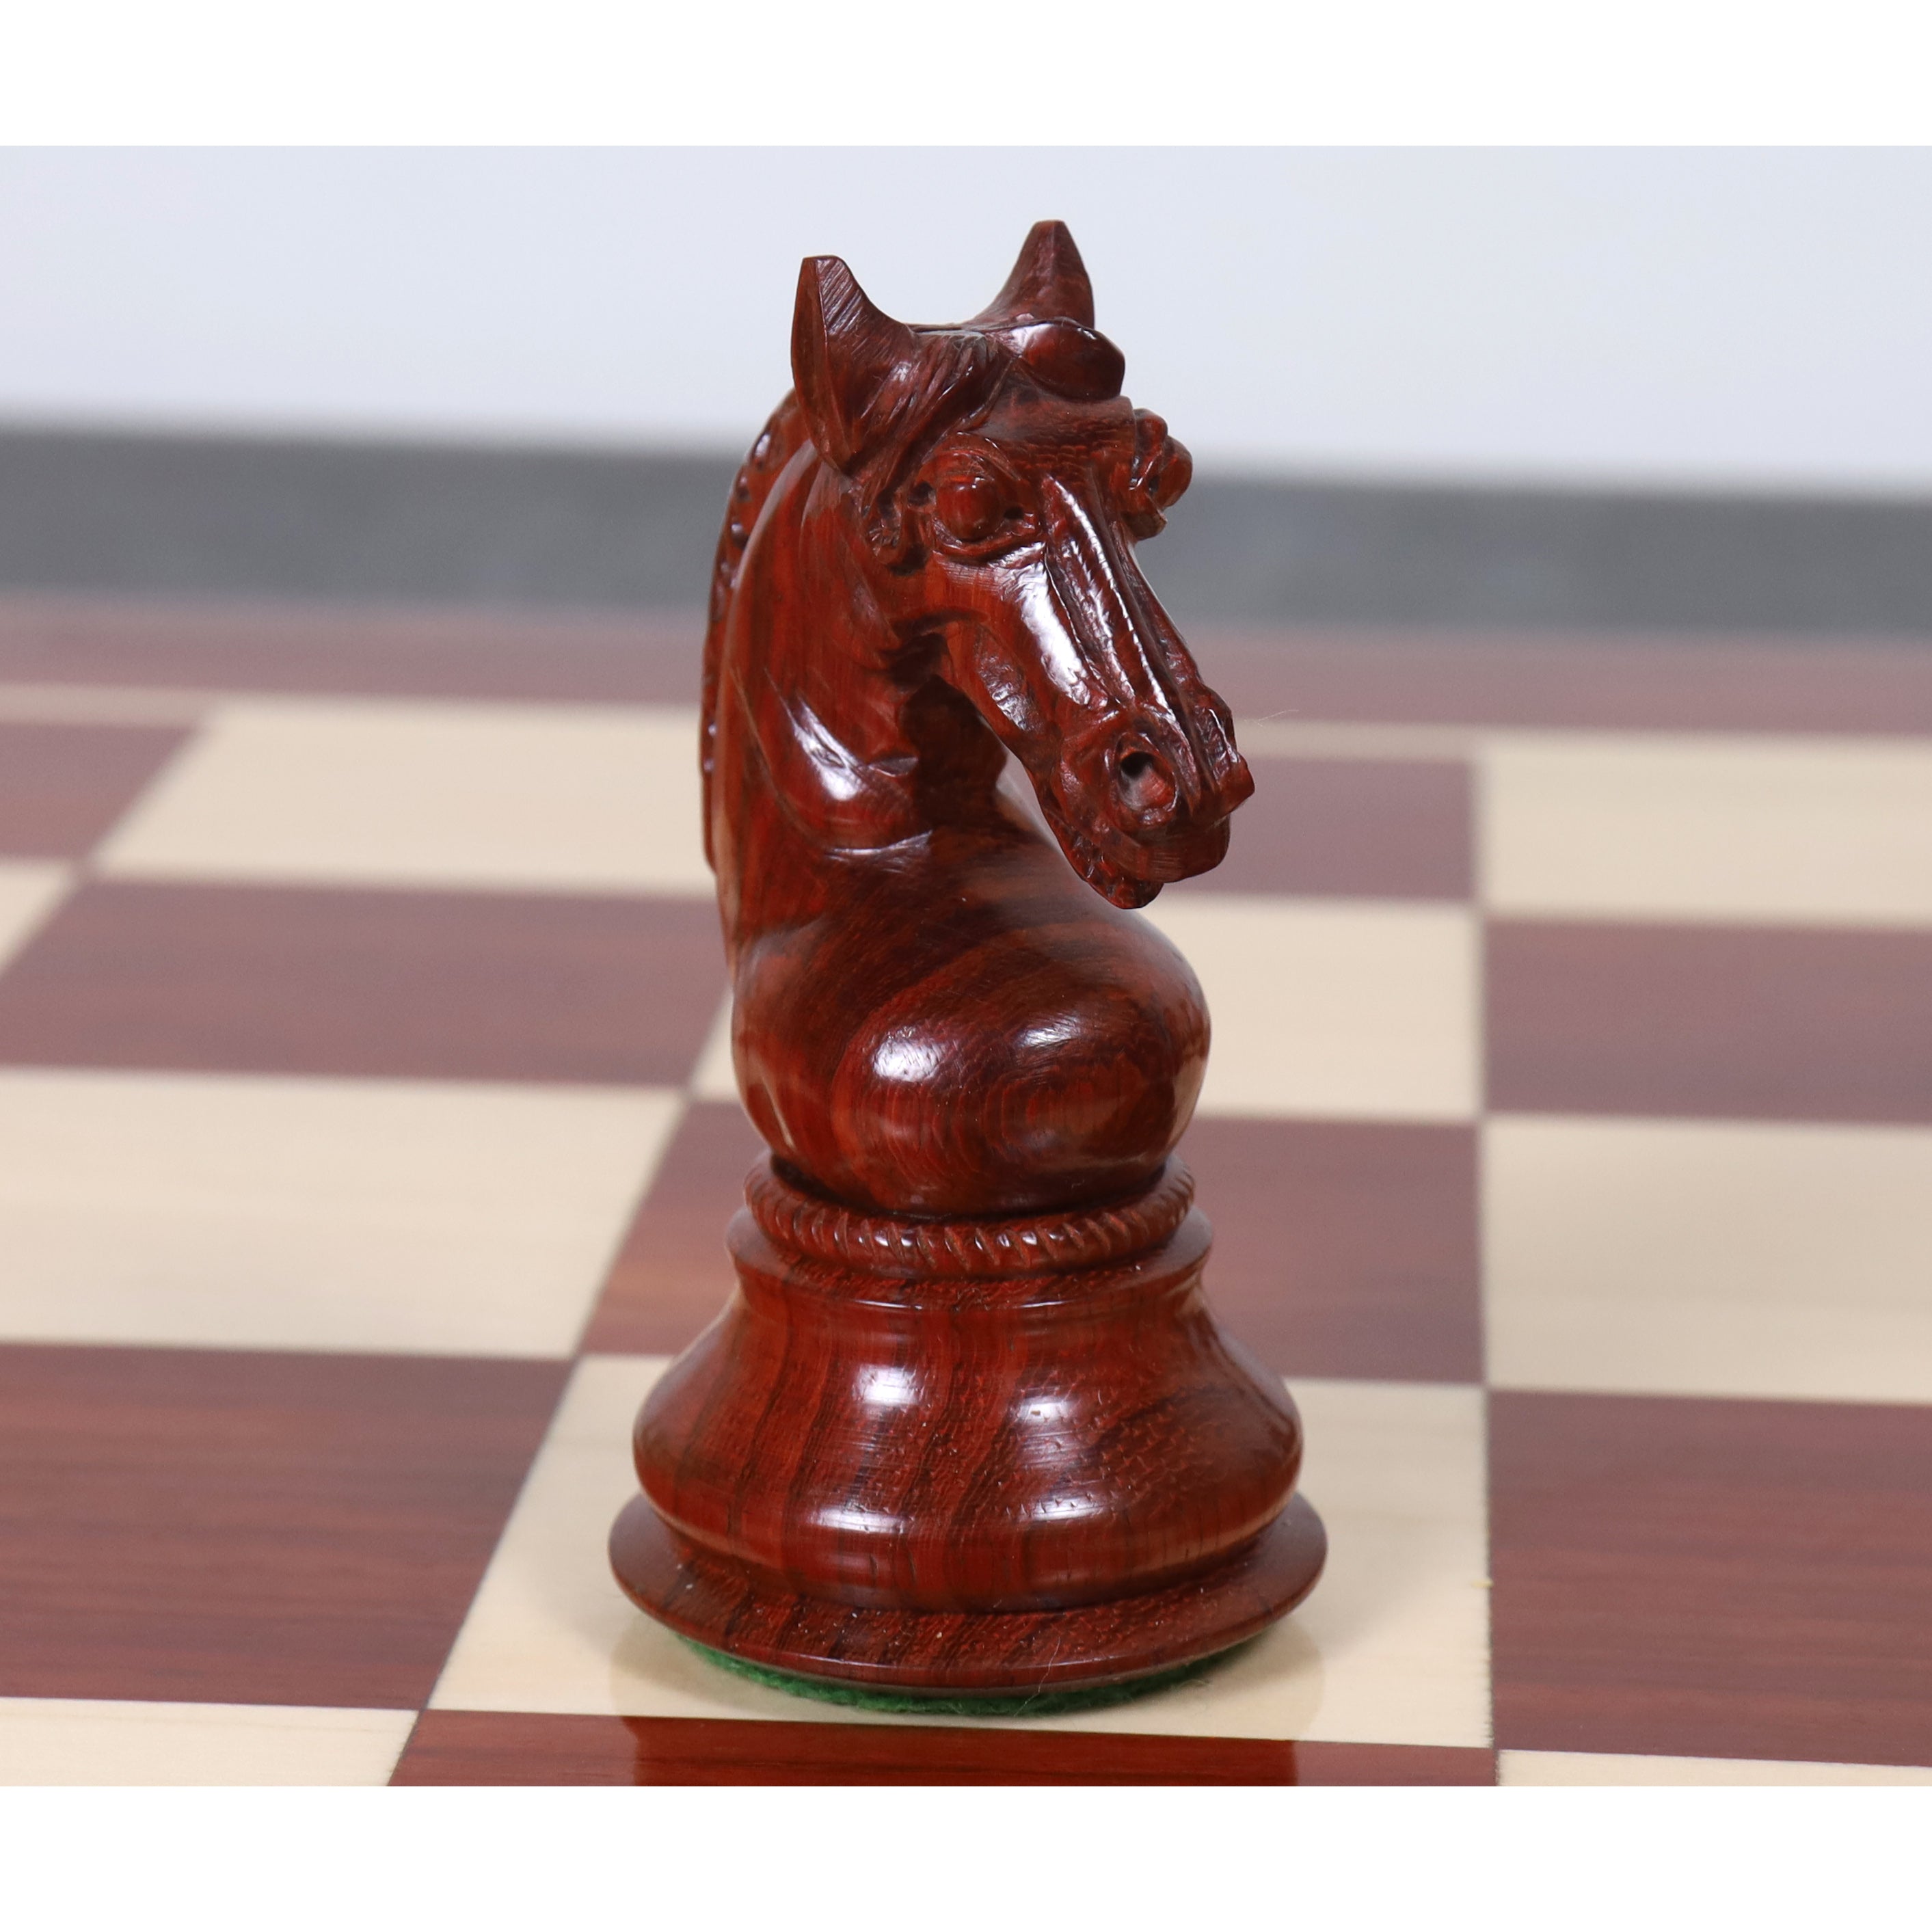 Sheffield Staunton Luxury Chess Pieces Only Set